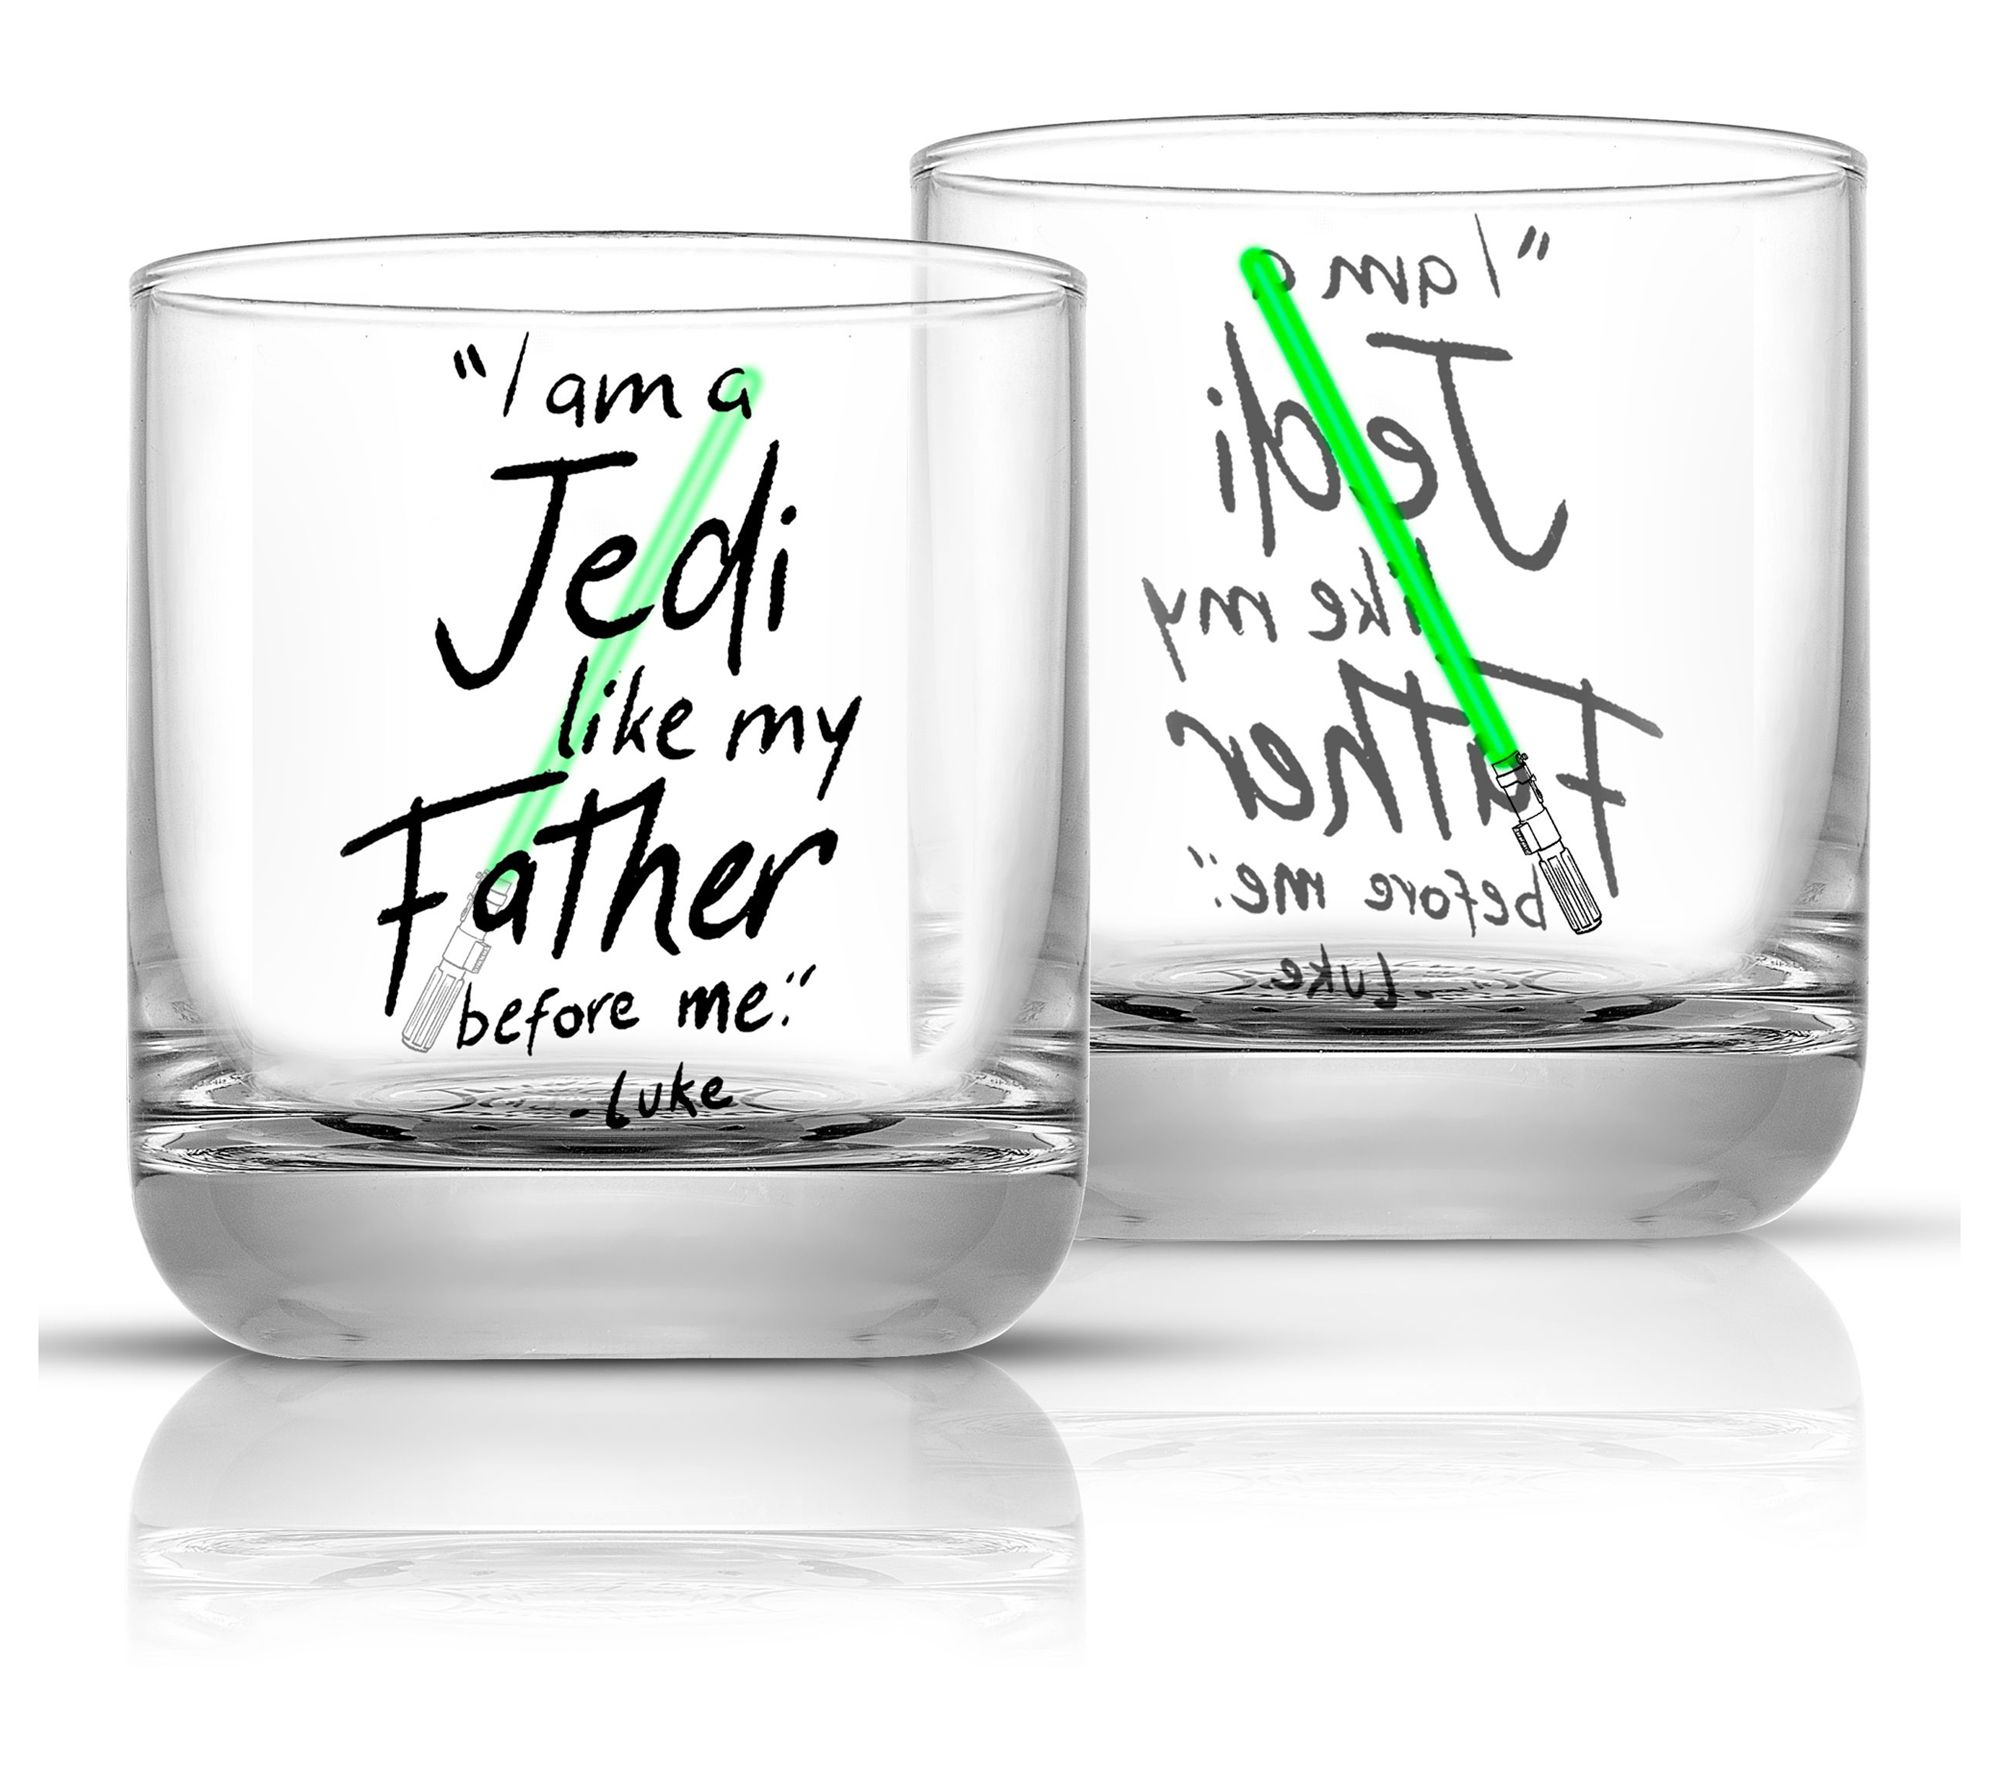 JoyJolt Star Wars Luke Skywalker Lightsaber Stemless Drinking Glass - 15 oz - Set of 2